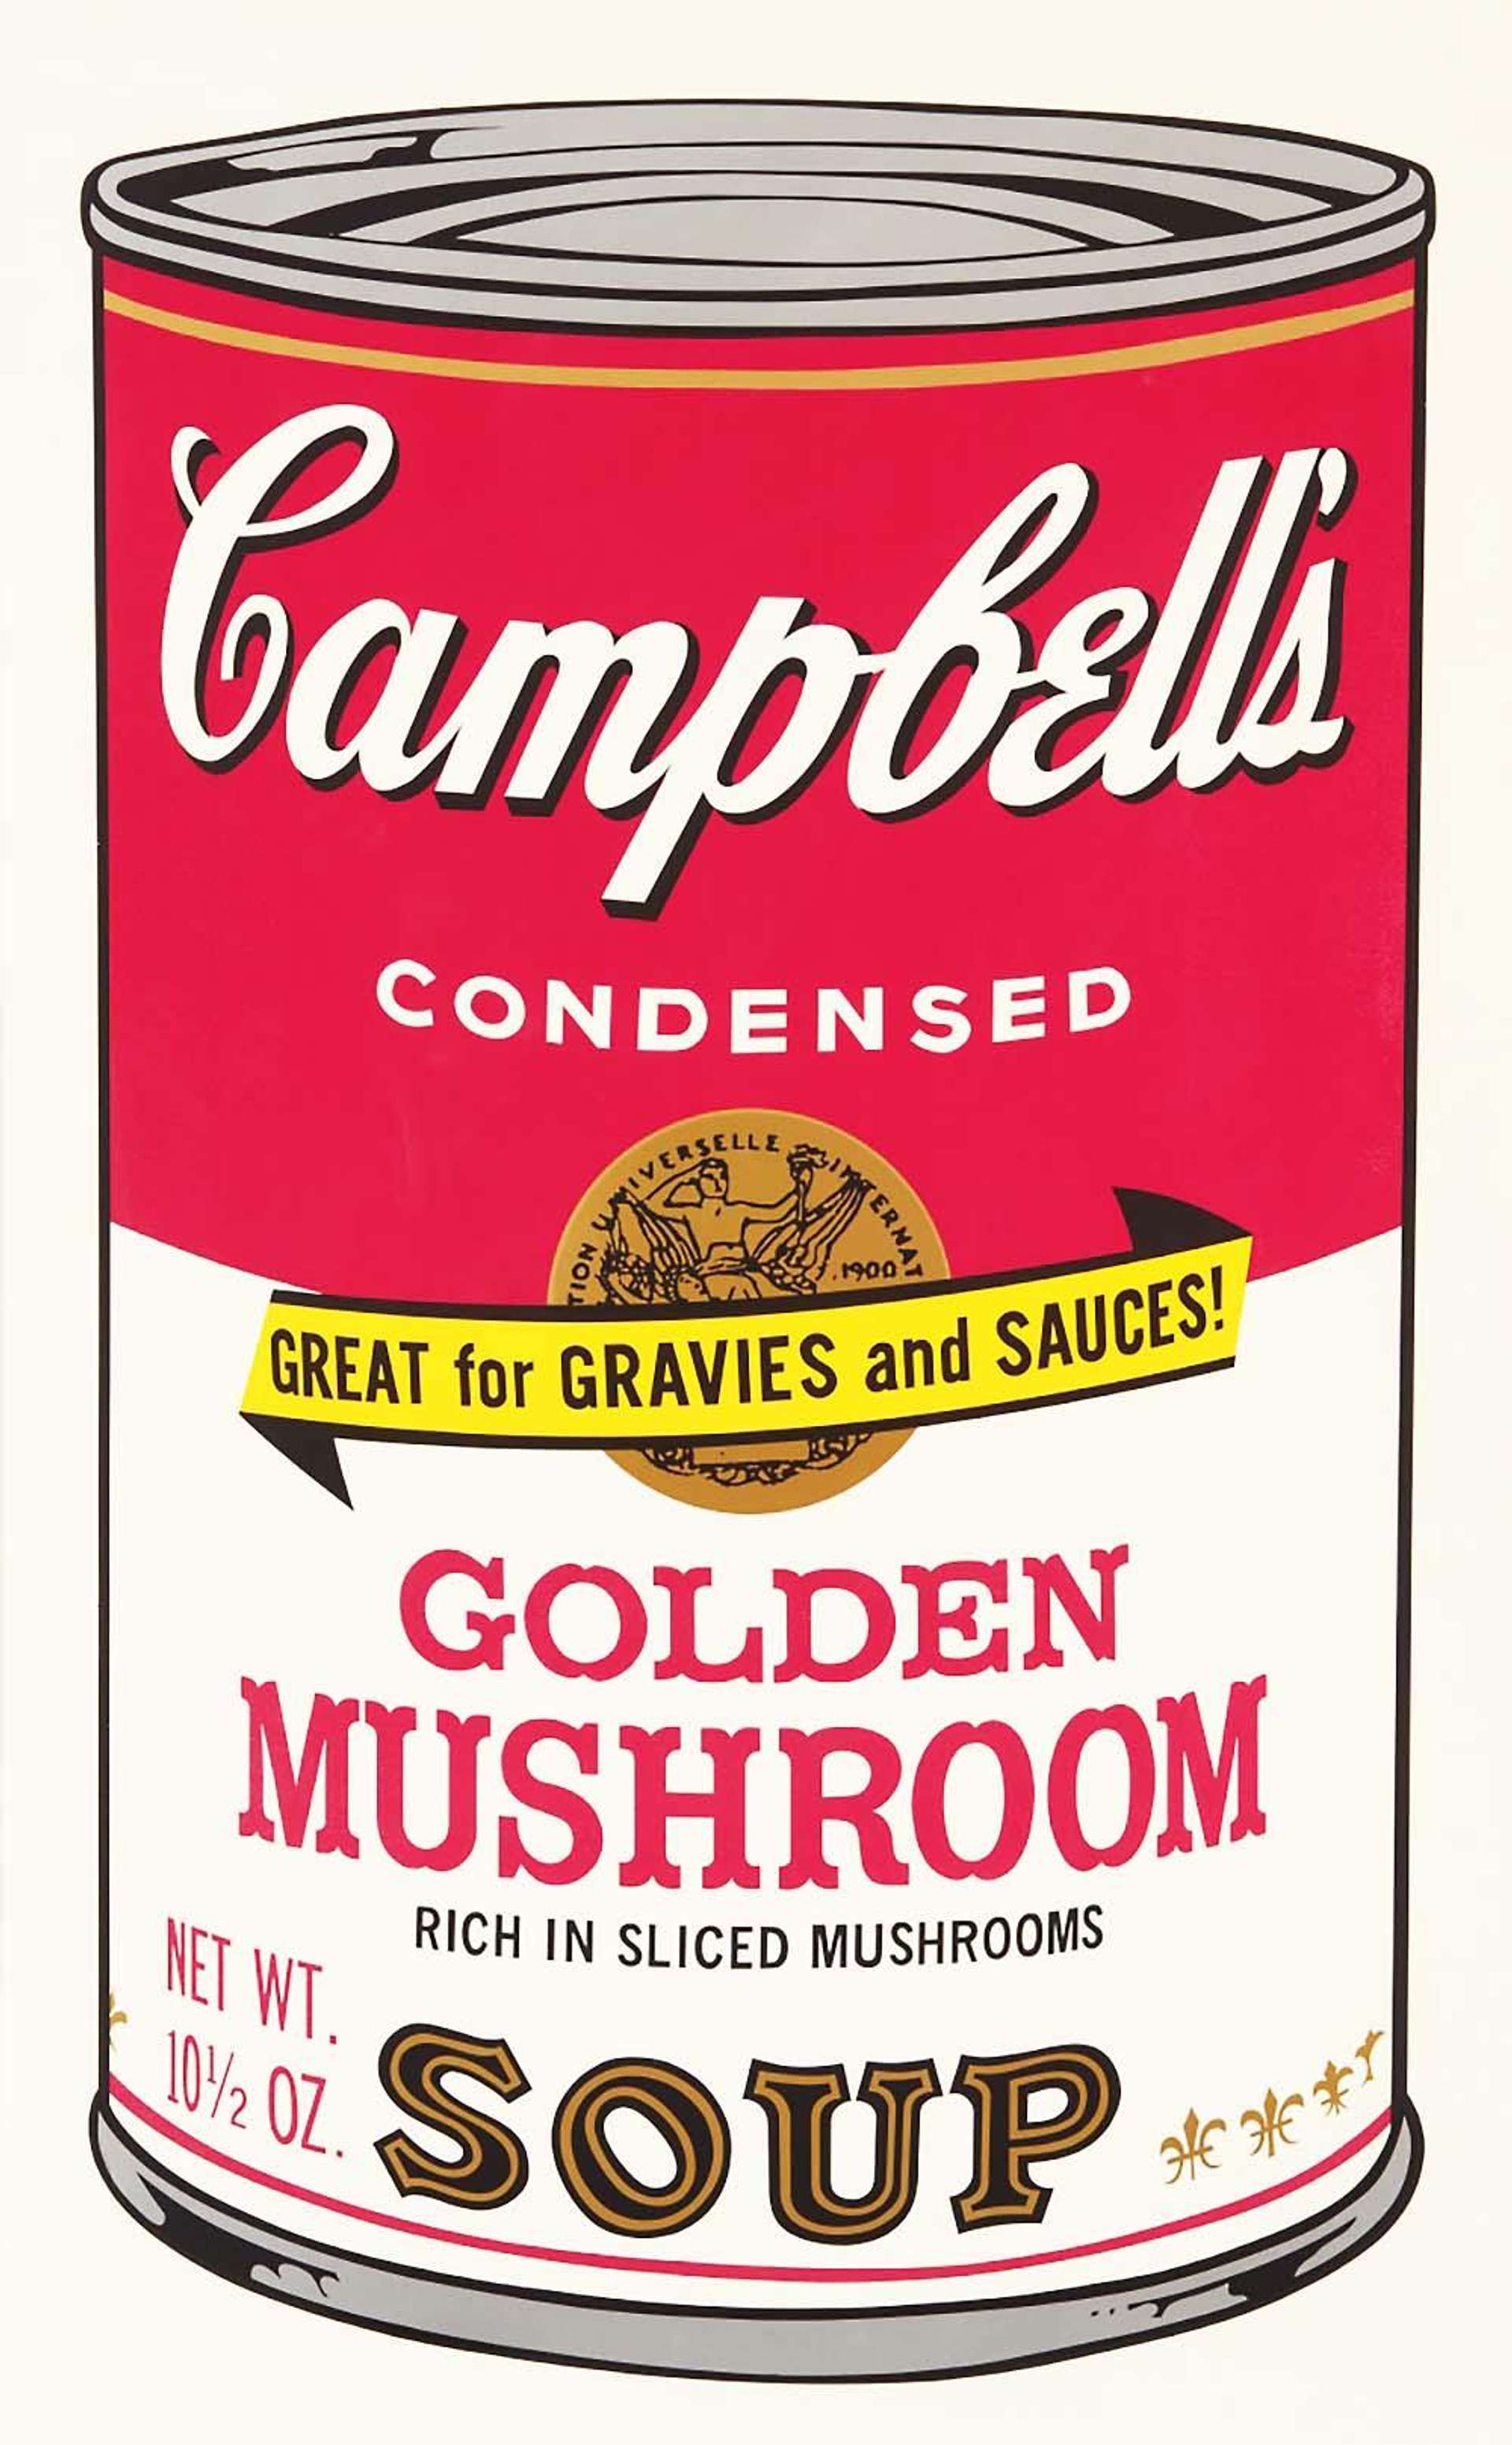 Campbell's Soup II, Golden Mushroom (F. & S. II.62) - Signed Print by Andy Warhol 1969 - MyArtBroker